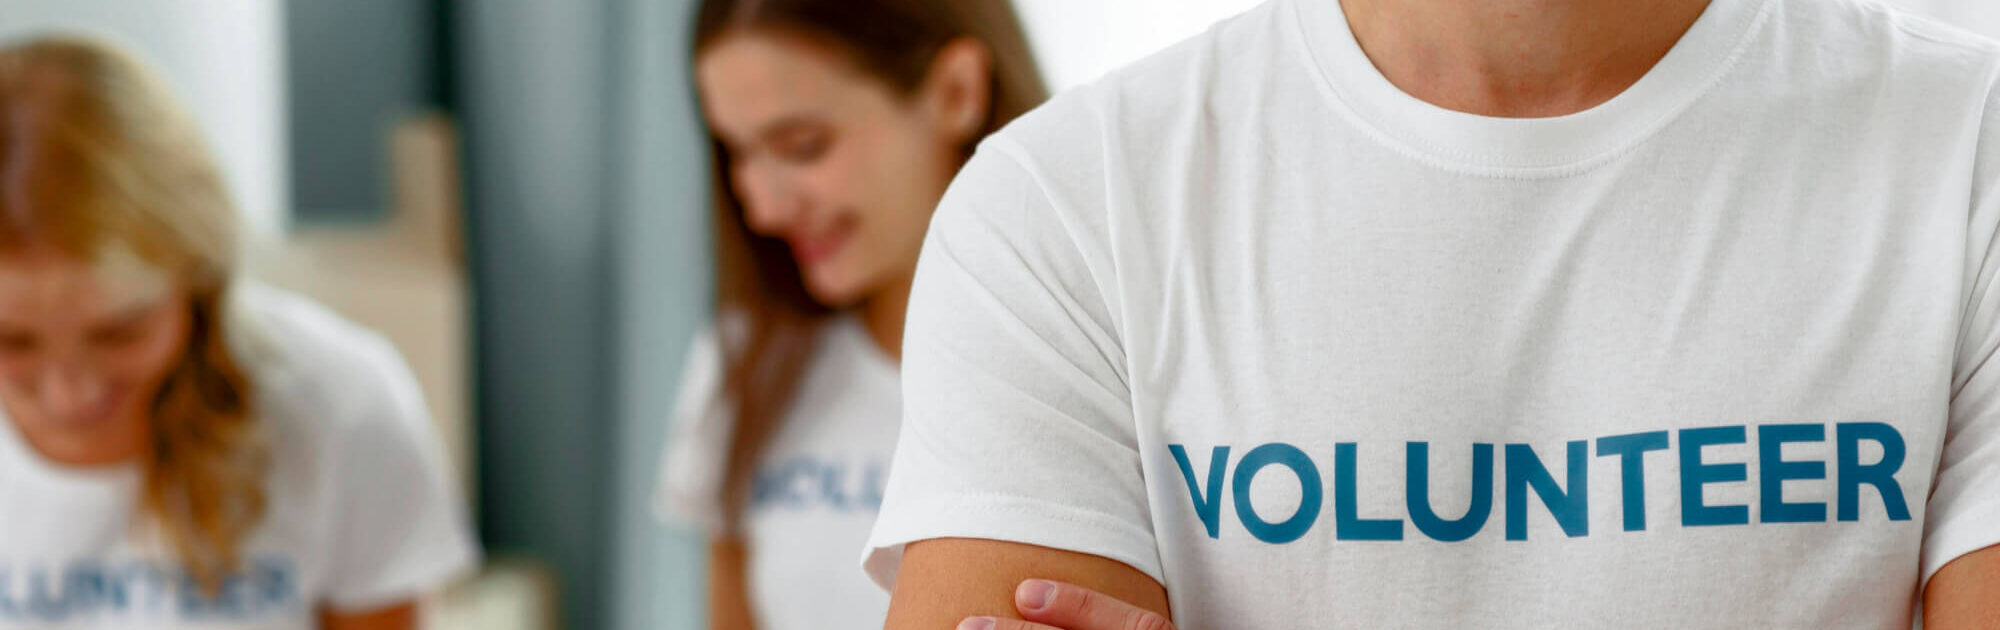 Verhoging vrijwilligersvergoeding: stijging naar €2.100